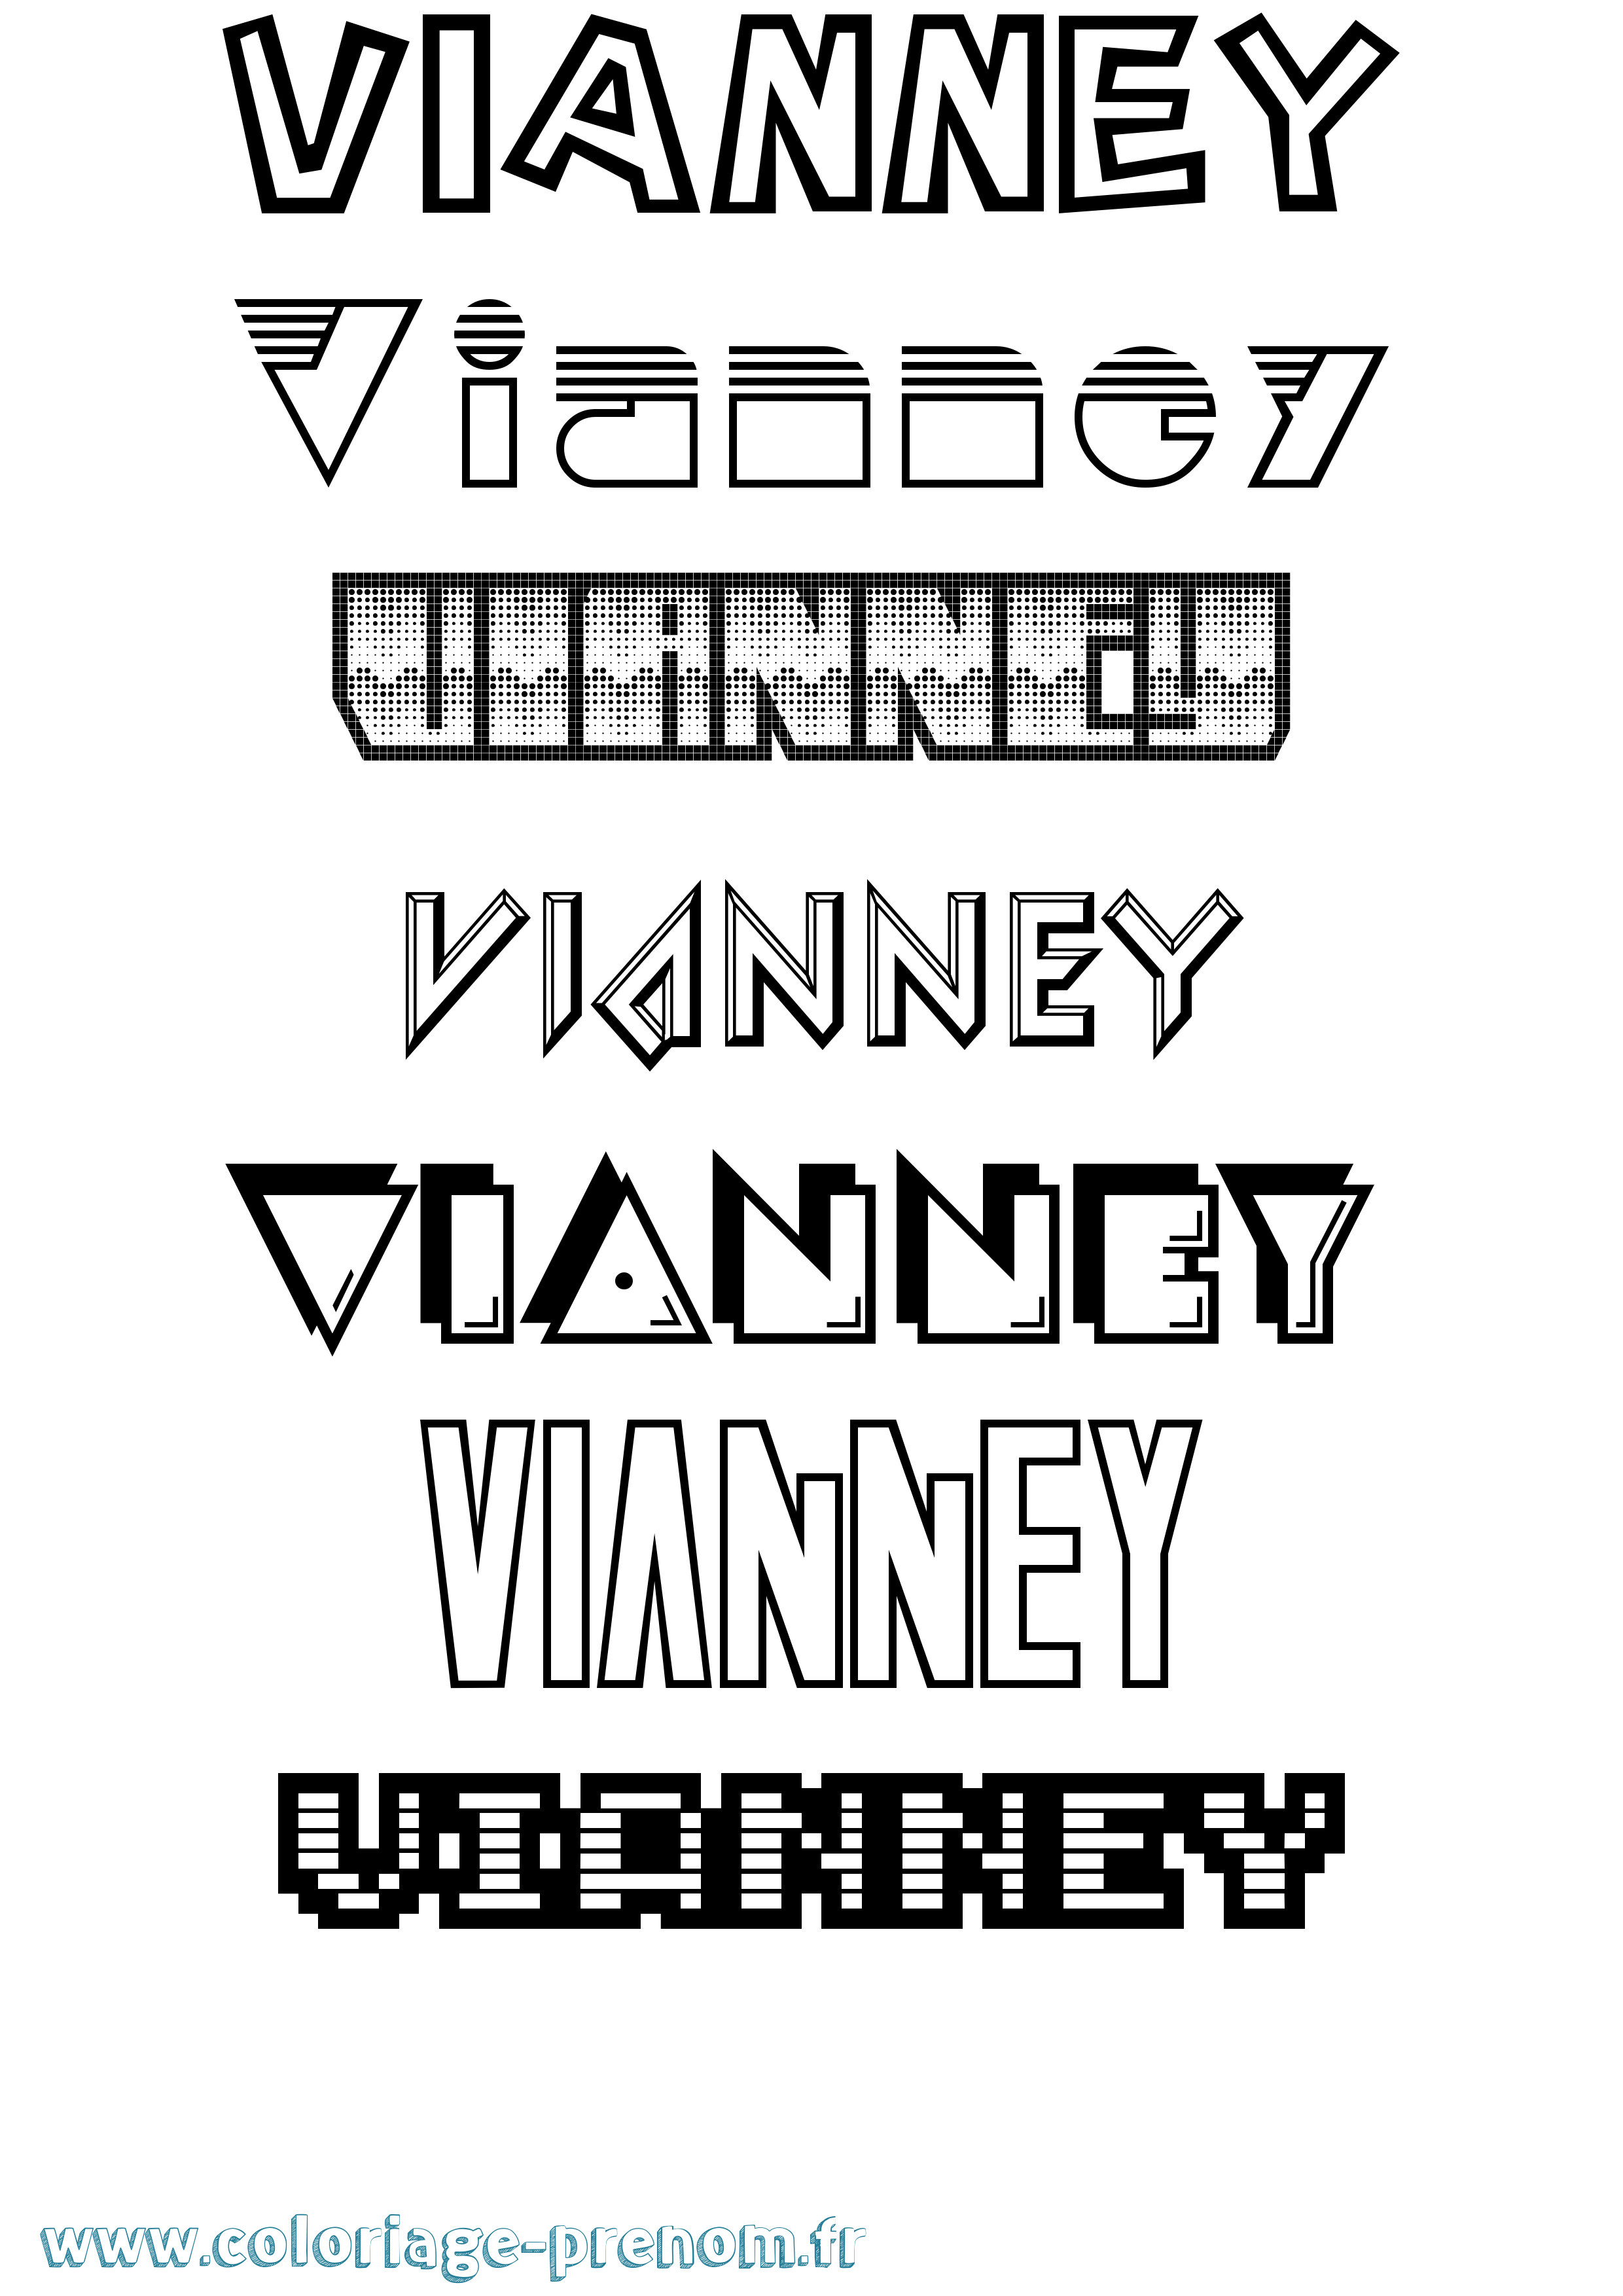 Coloriage prénom Vianney